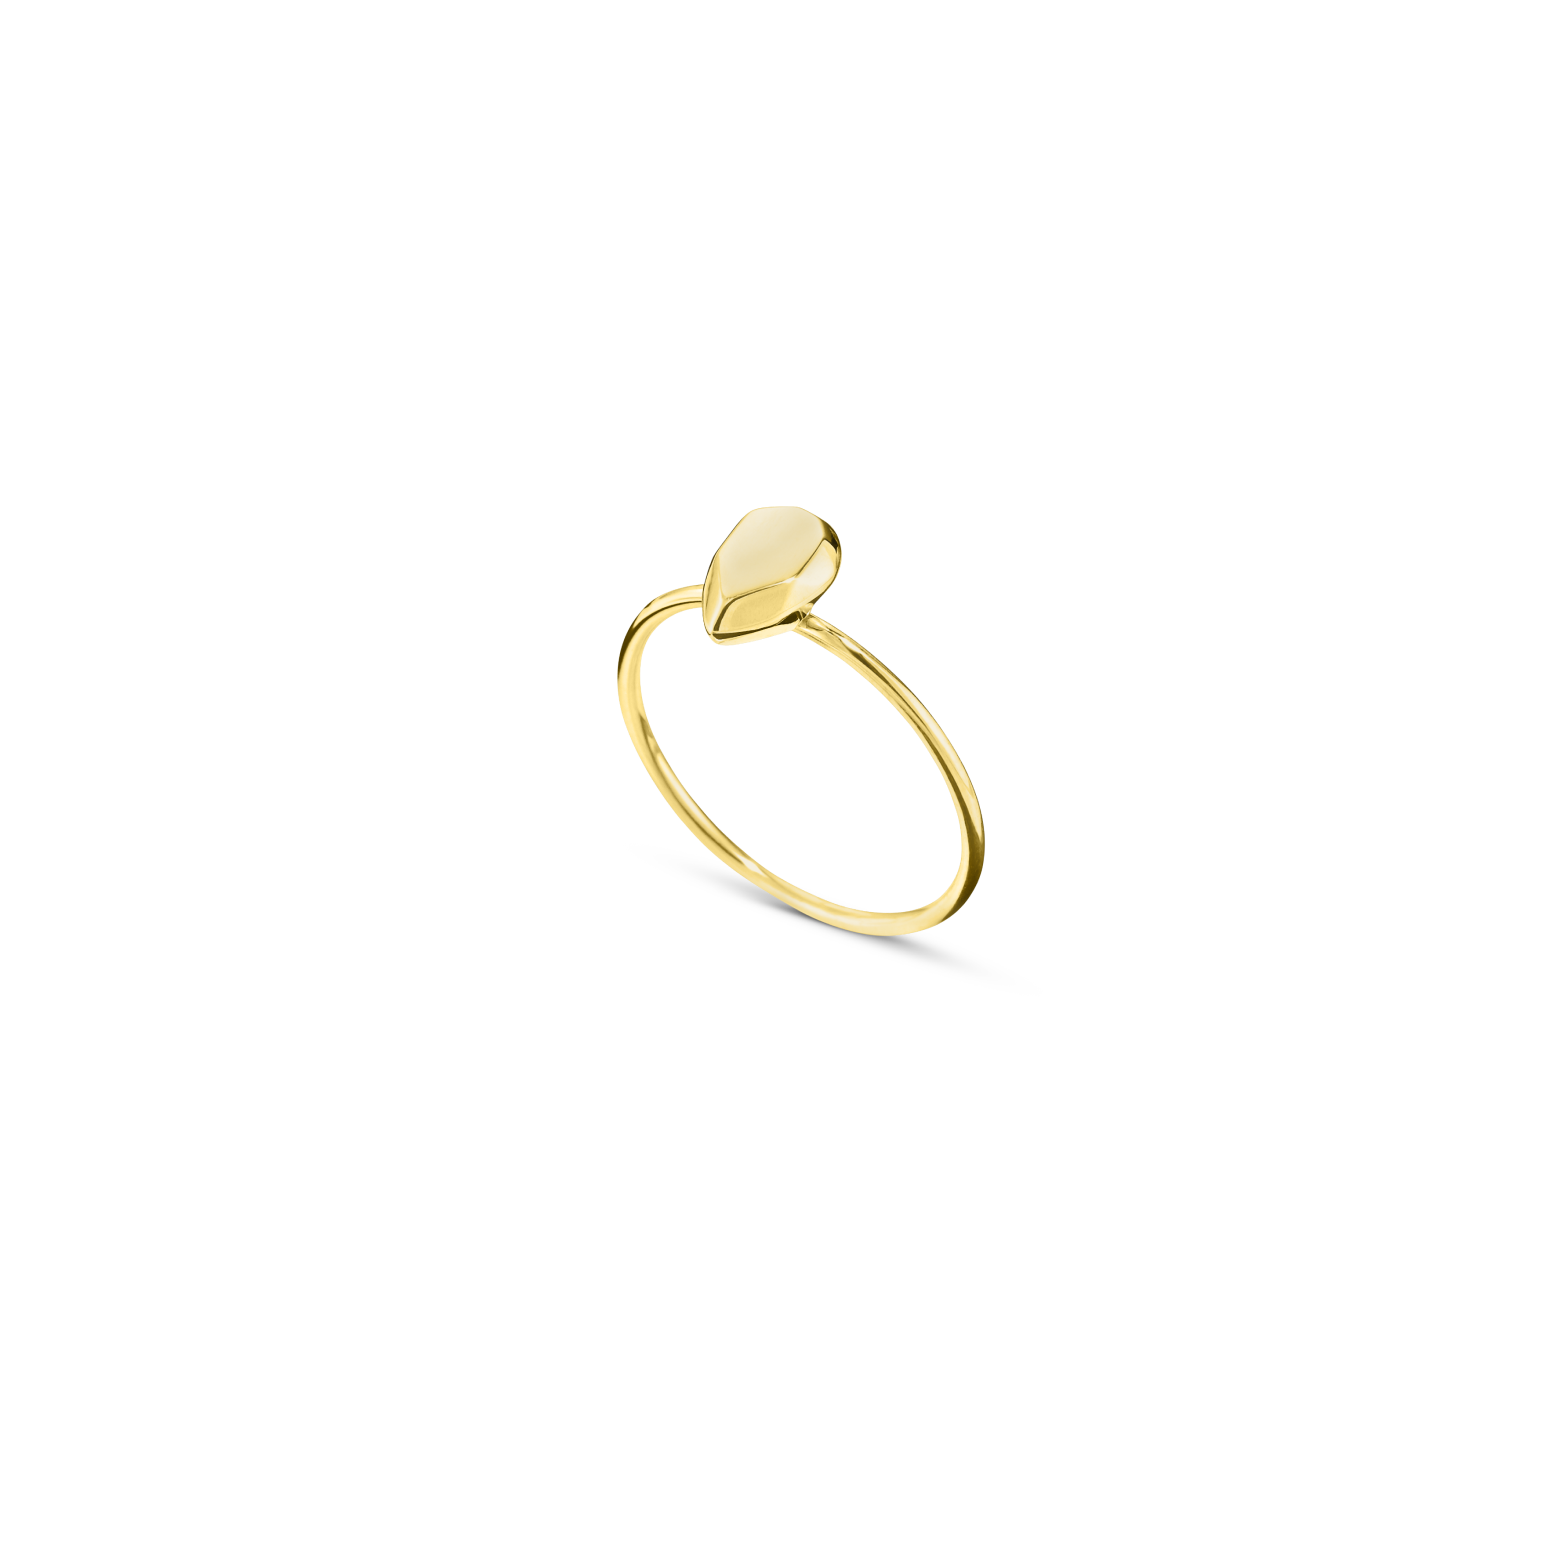 The Mini Pear Ring